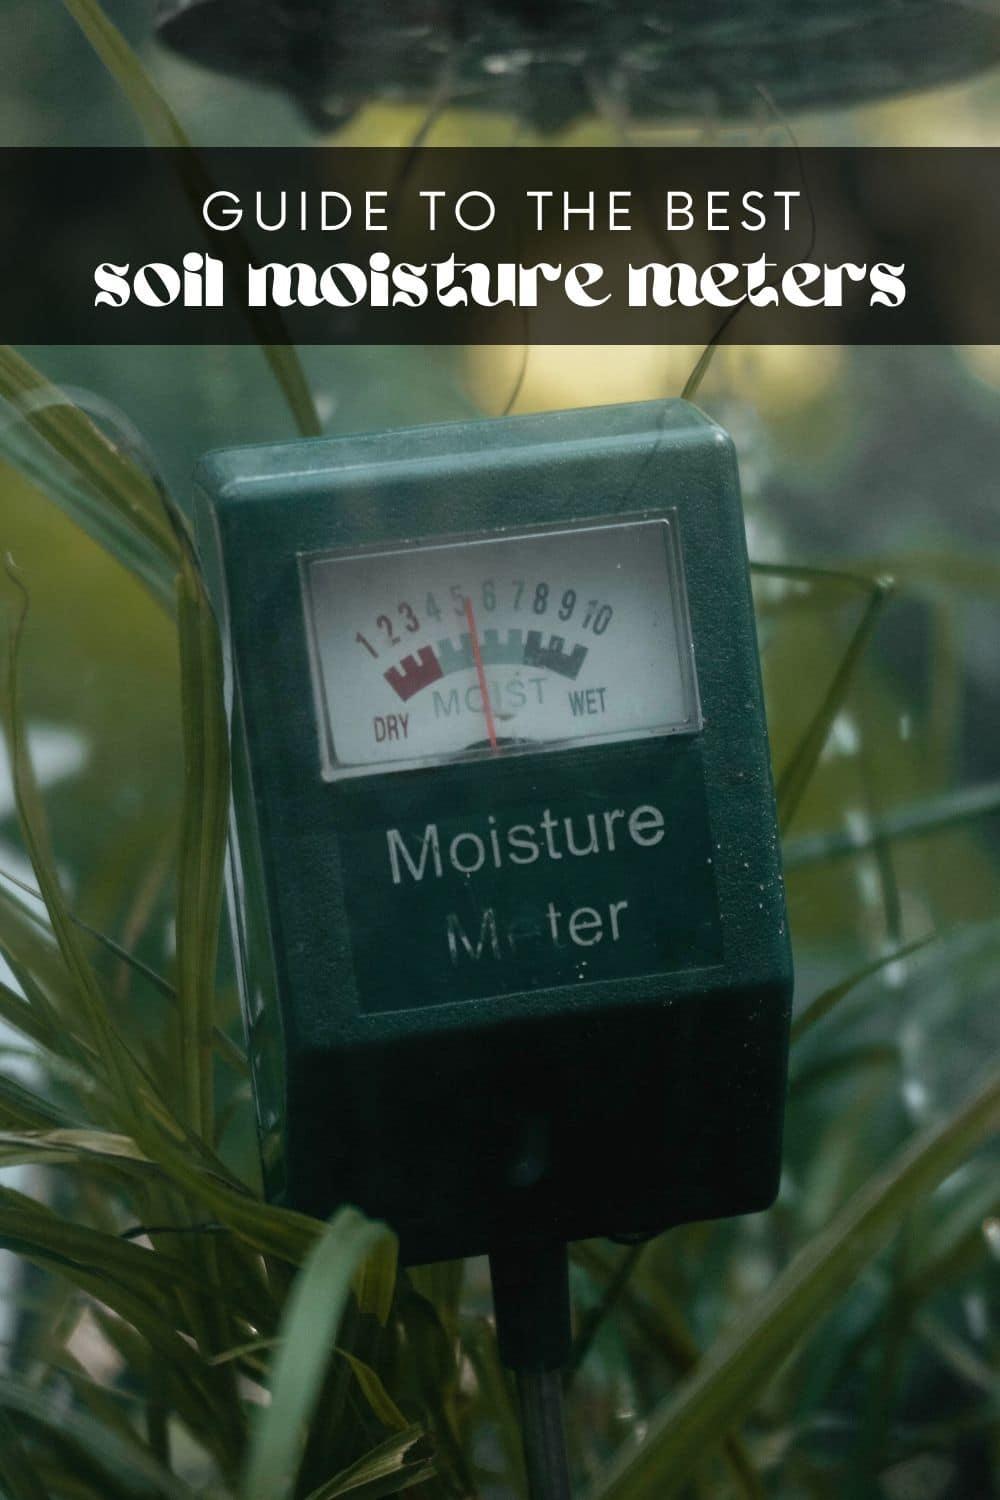 9 of the Best Soil Moisture Meters